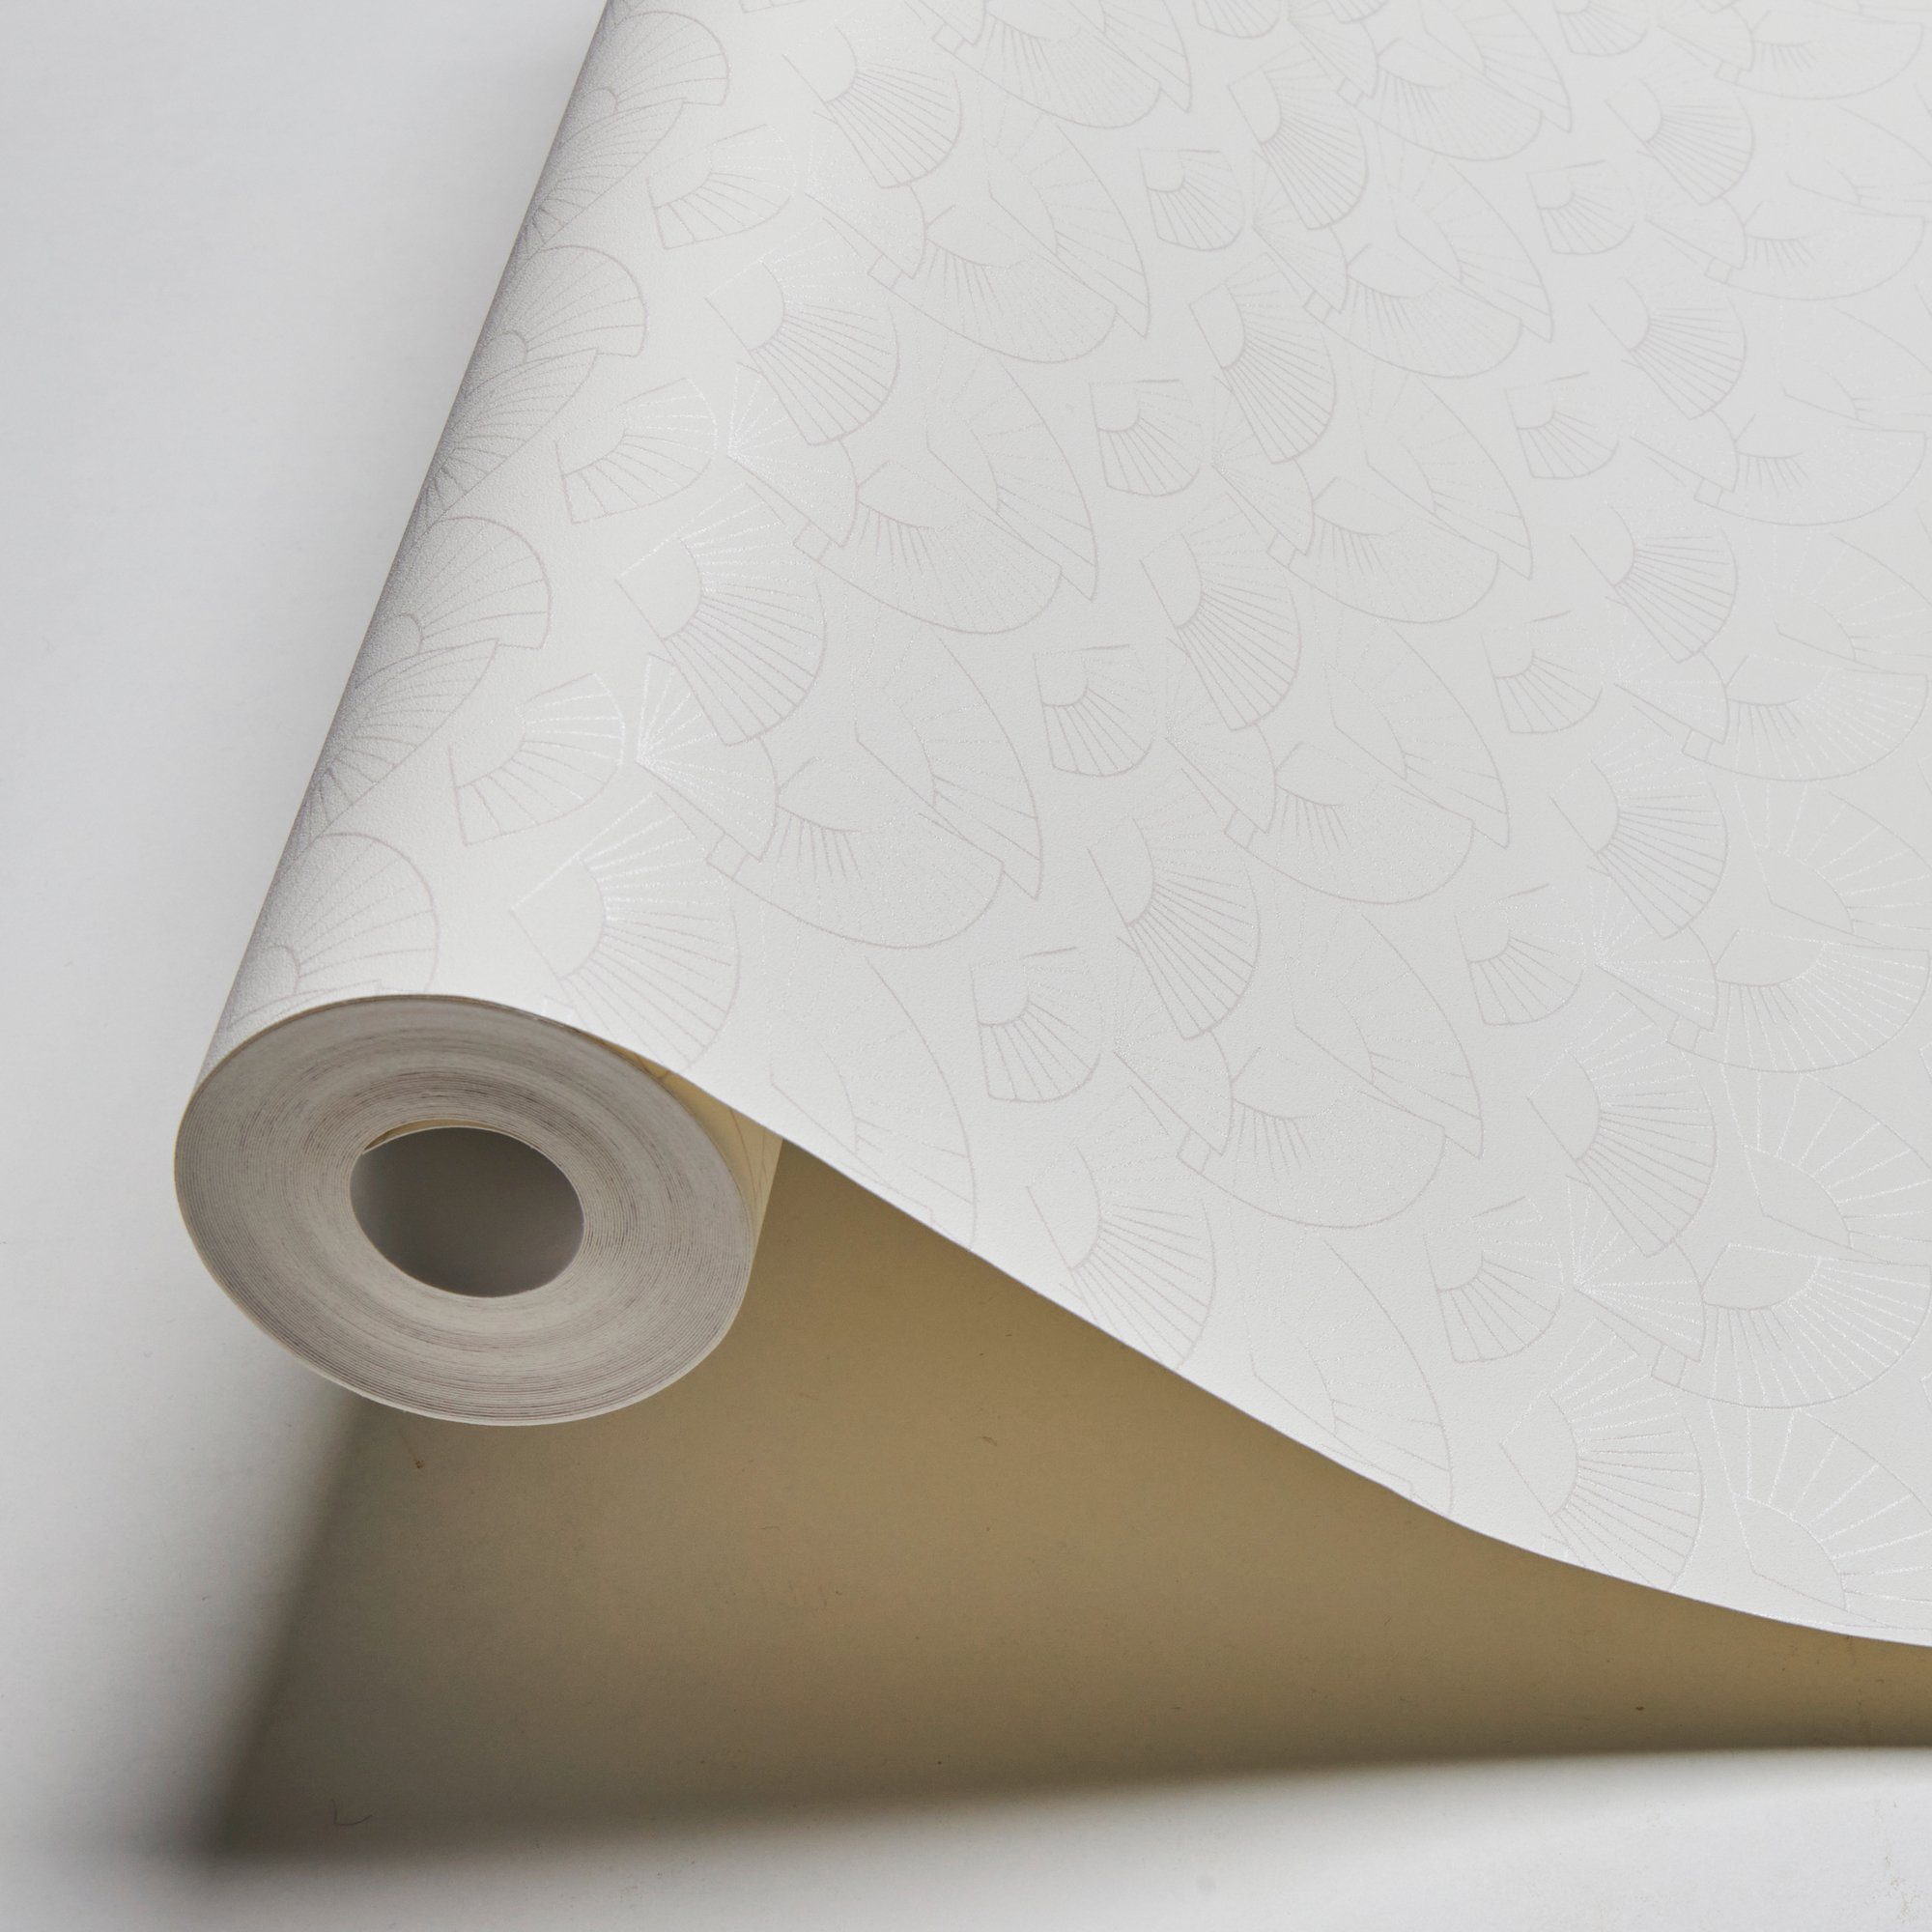 Paper Geometrische Vliestapete Metallic A.S. Tapete Fan, weiß/metallic Création Designer Architects